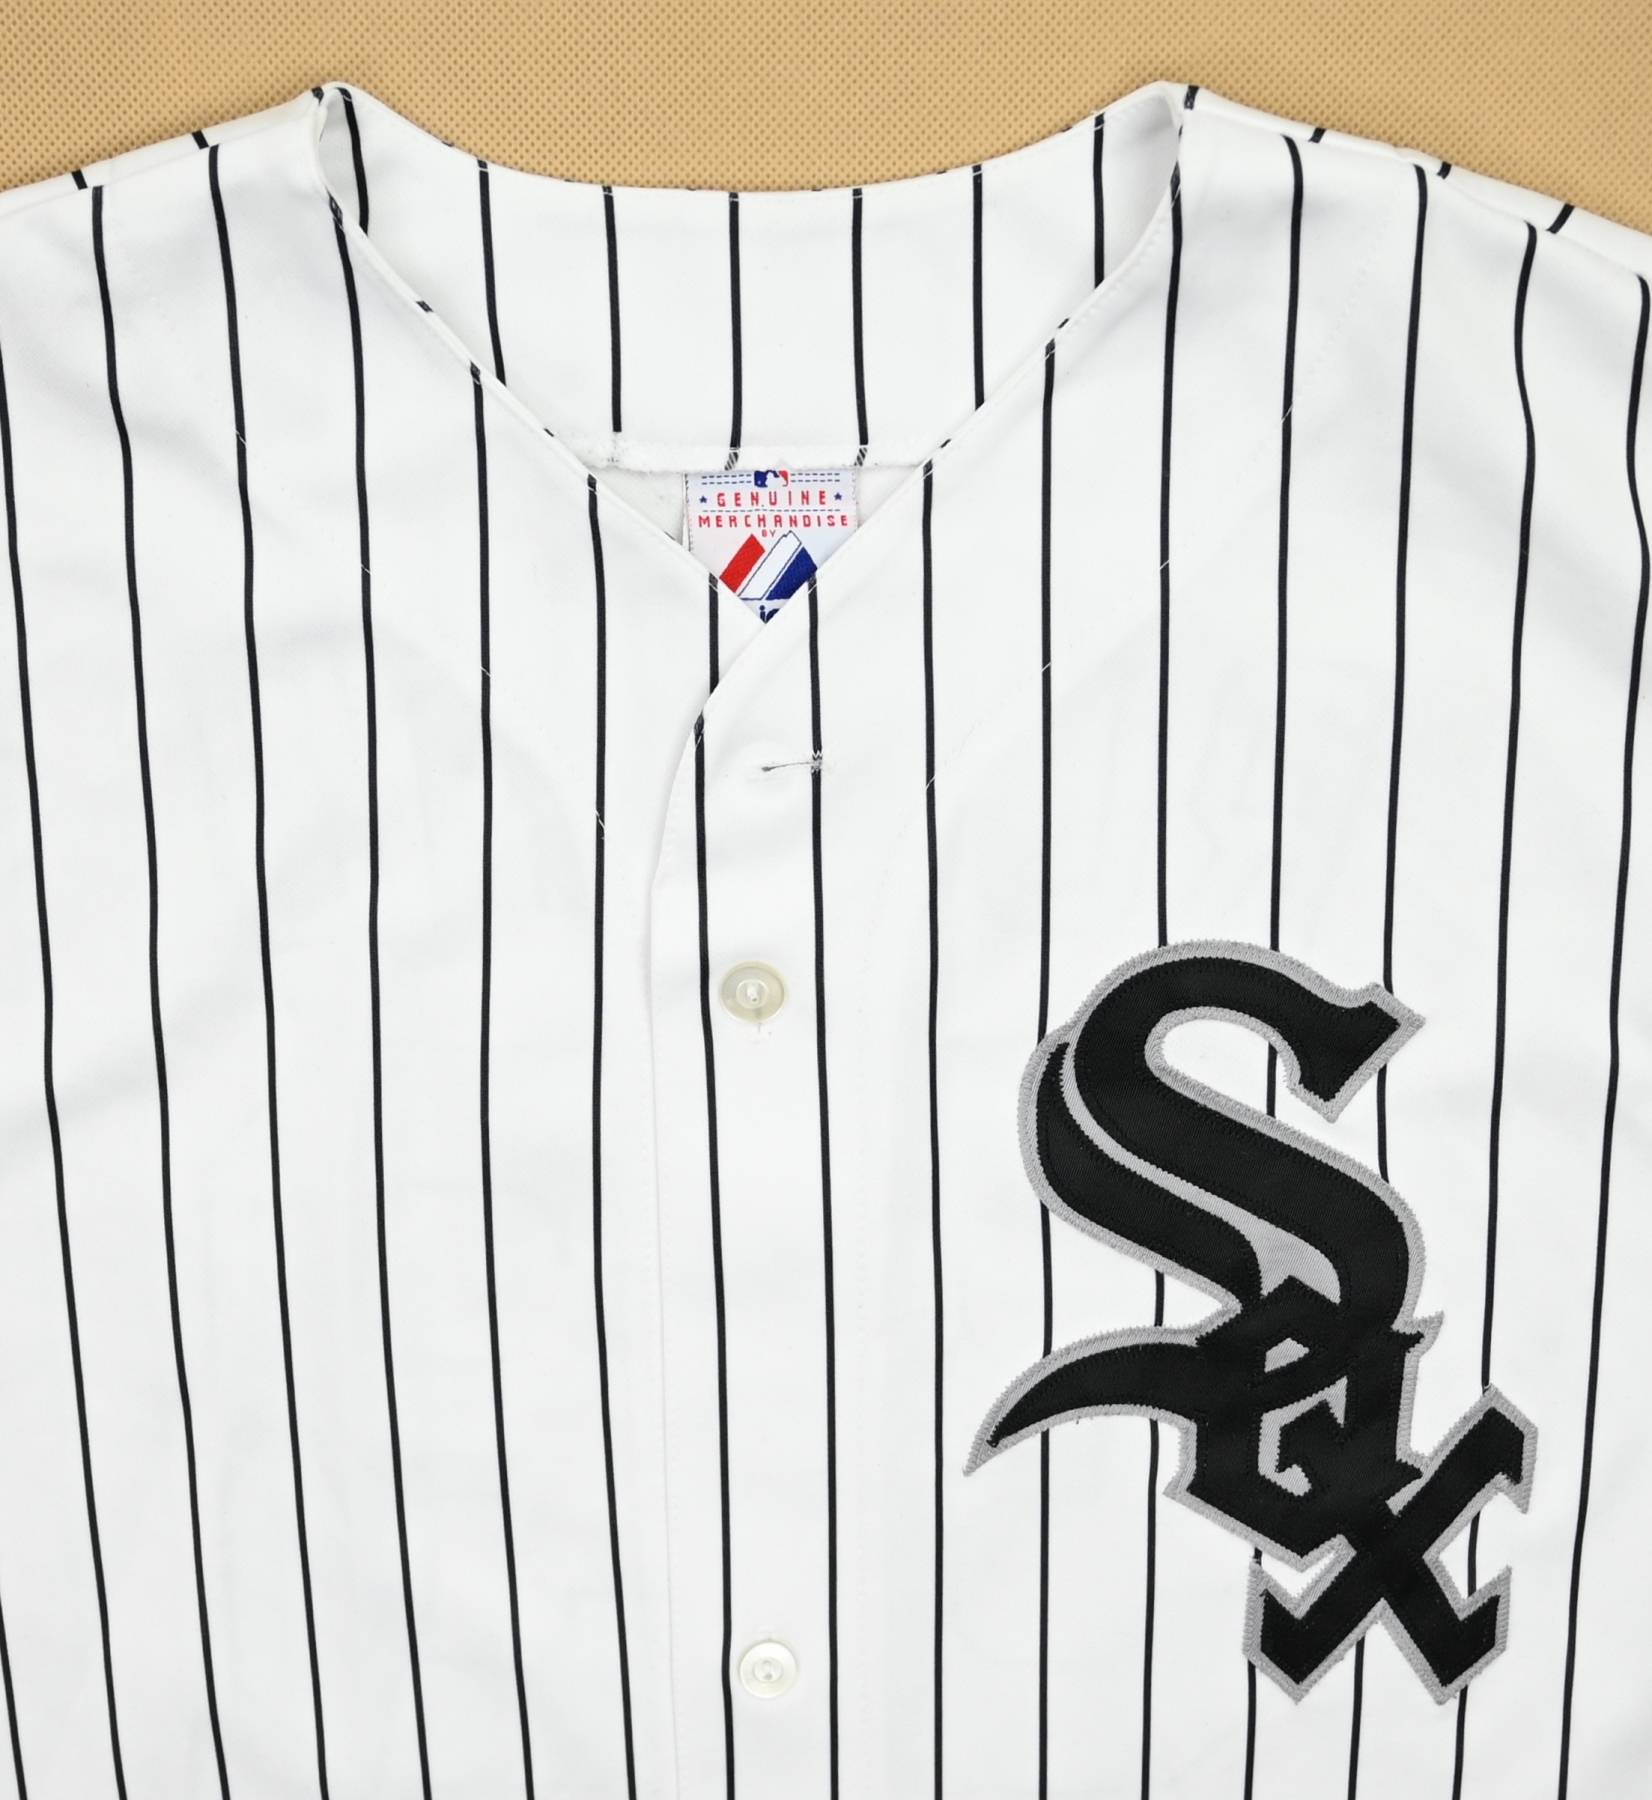 CHICAGO WHITE SOX *ROWAND* BASEBALL XL Other Shirts \ Baseball